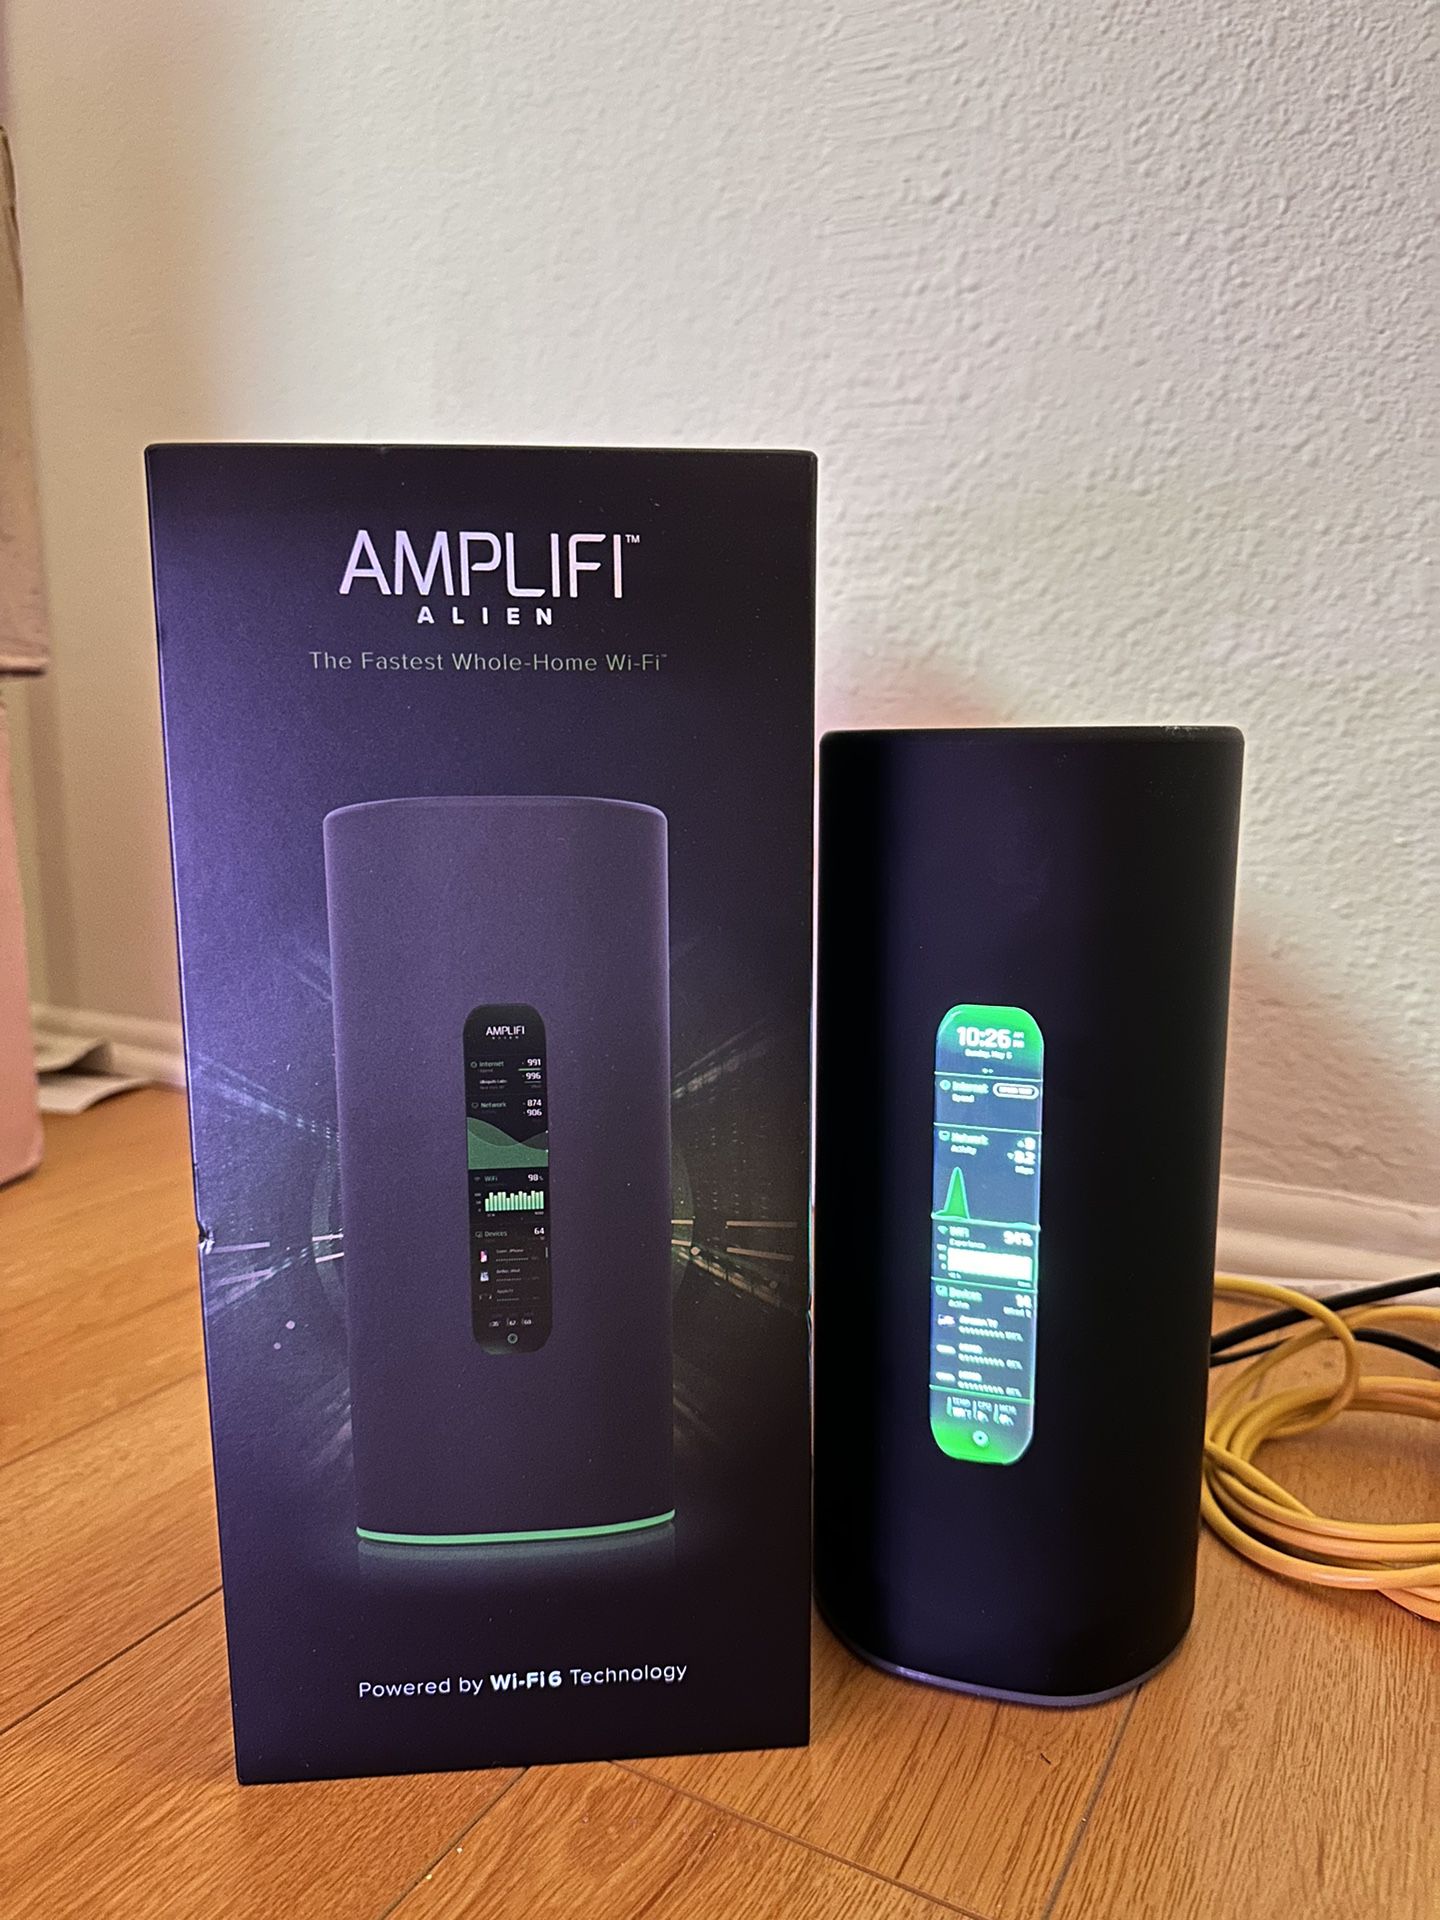 Amplifi Alien Router